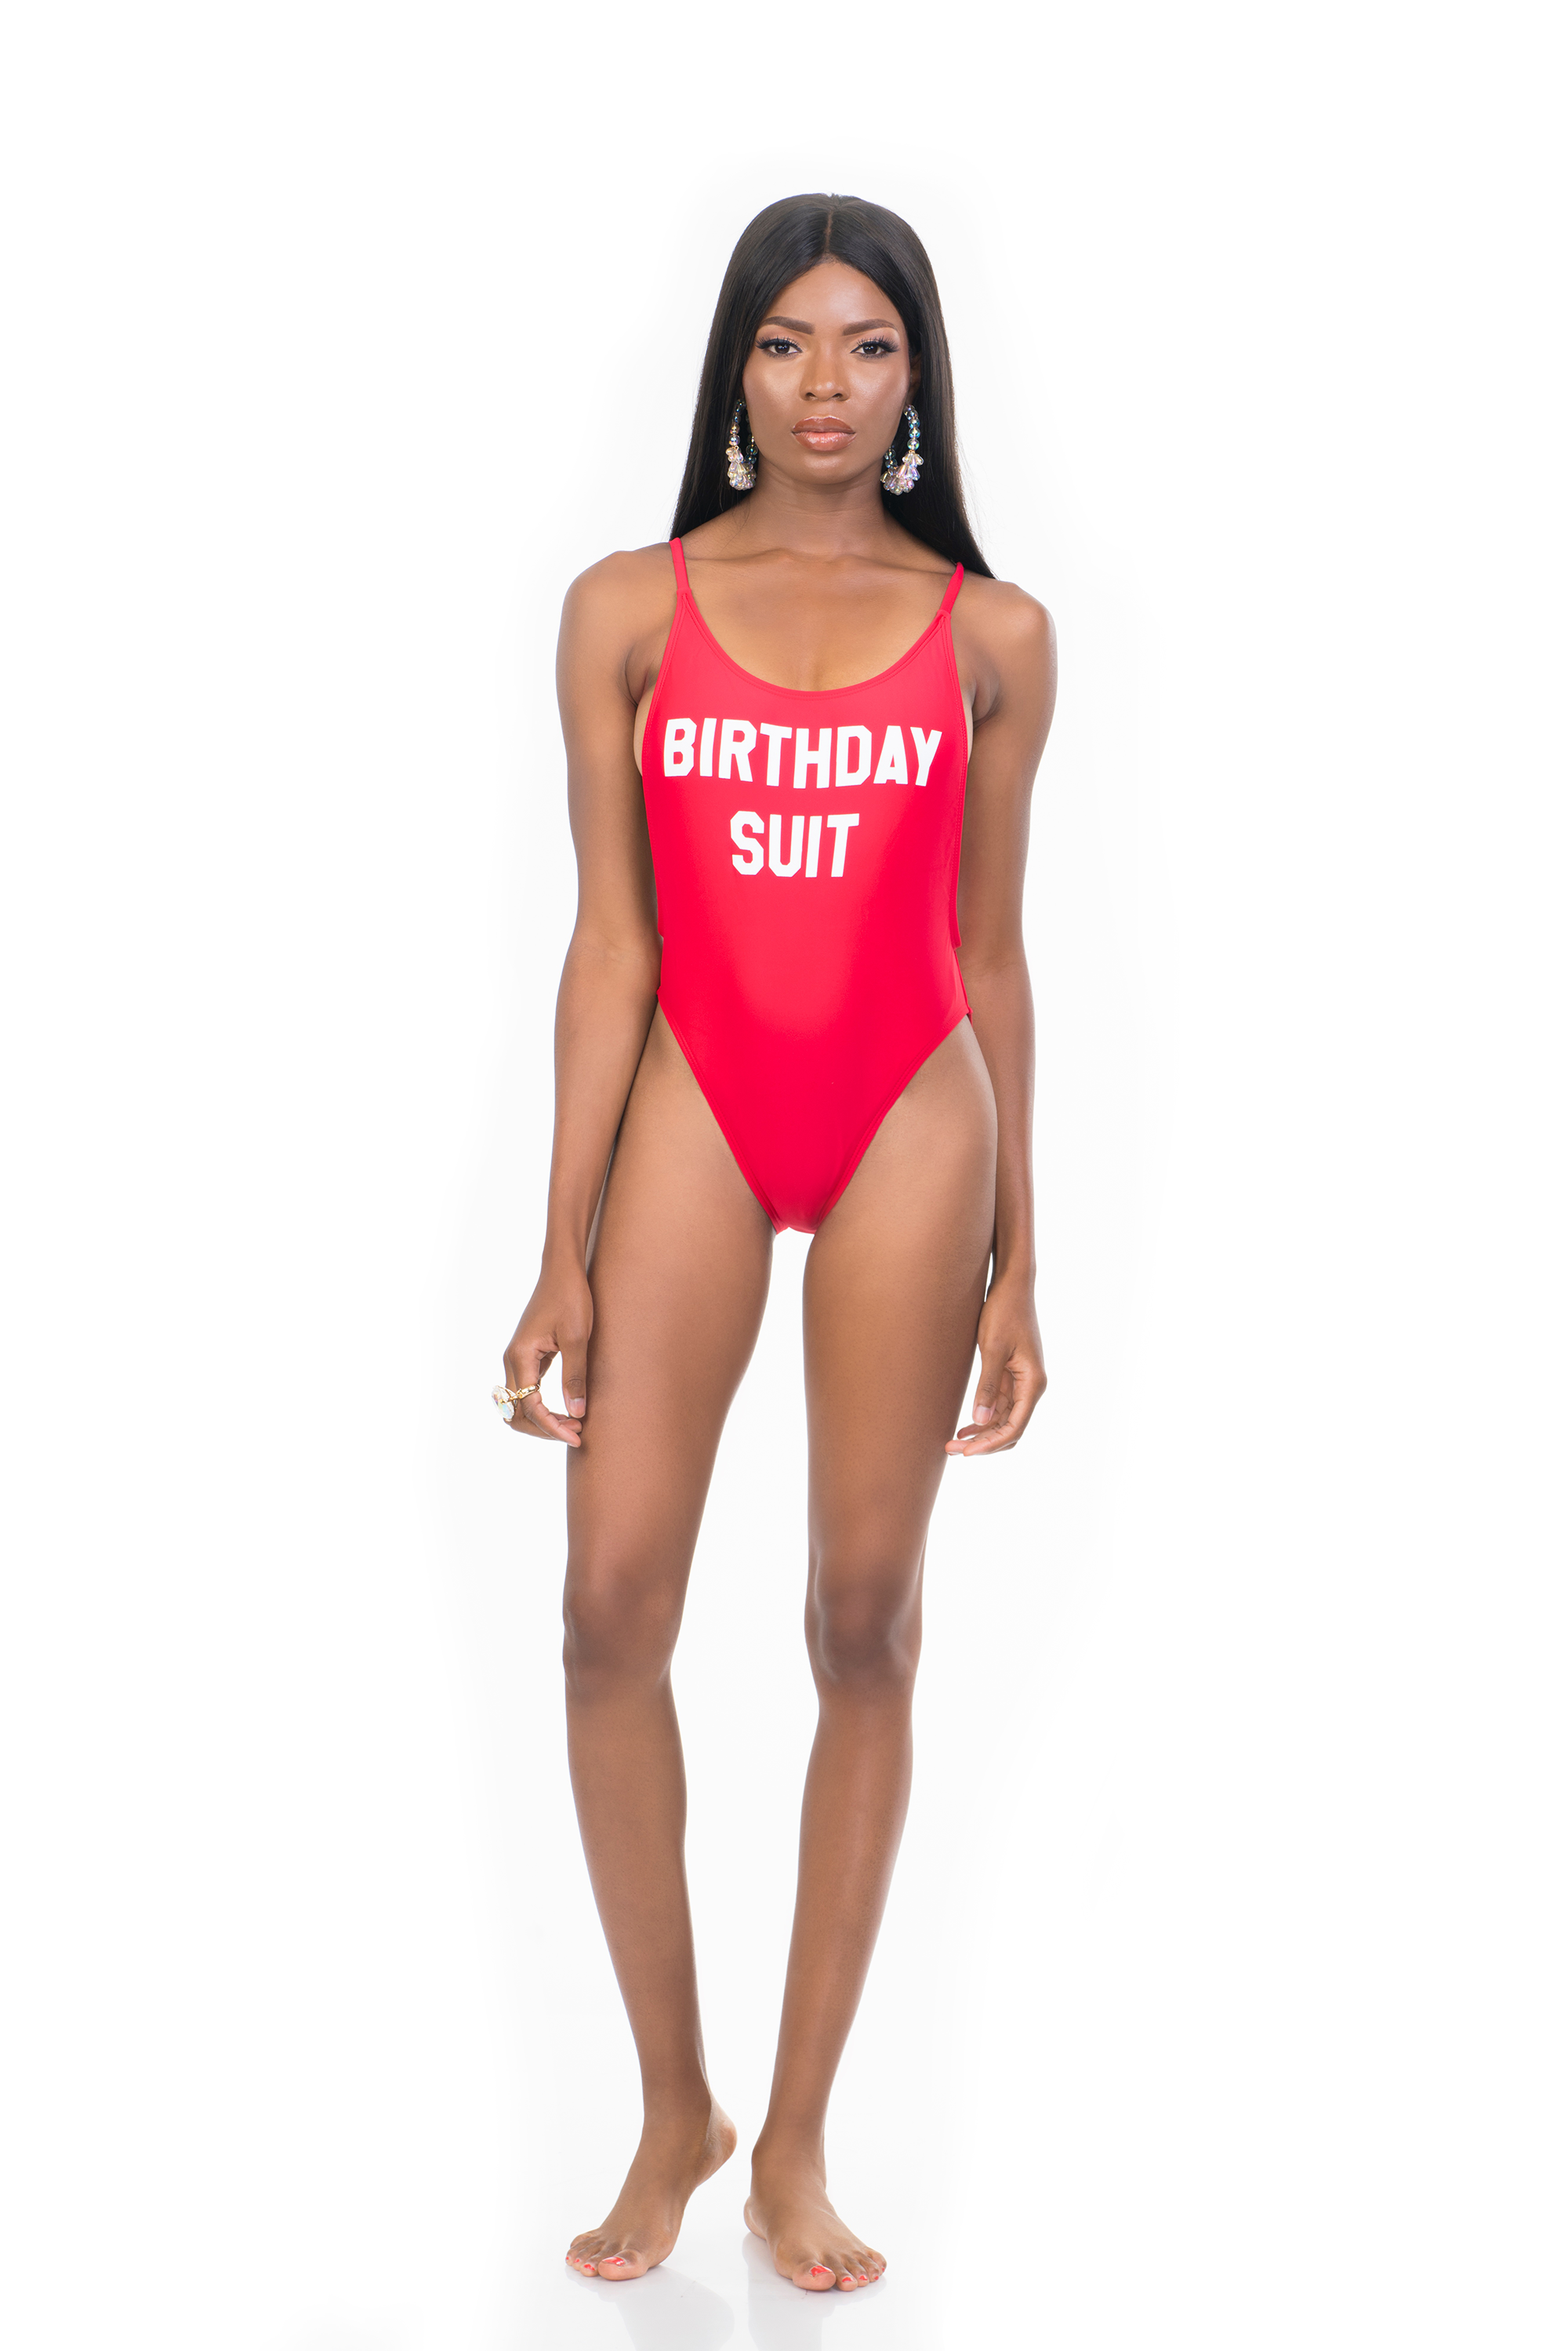 Birthday Suit - The Wordy Girl